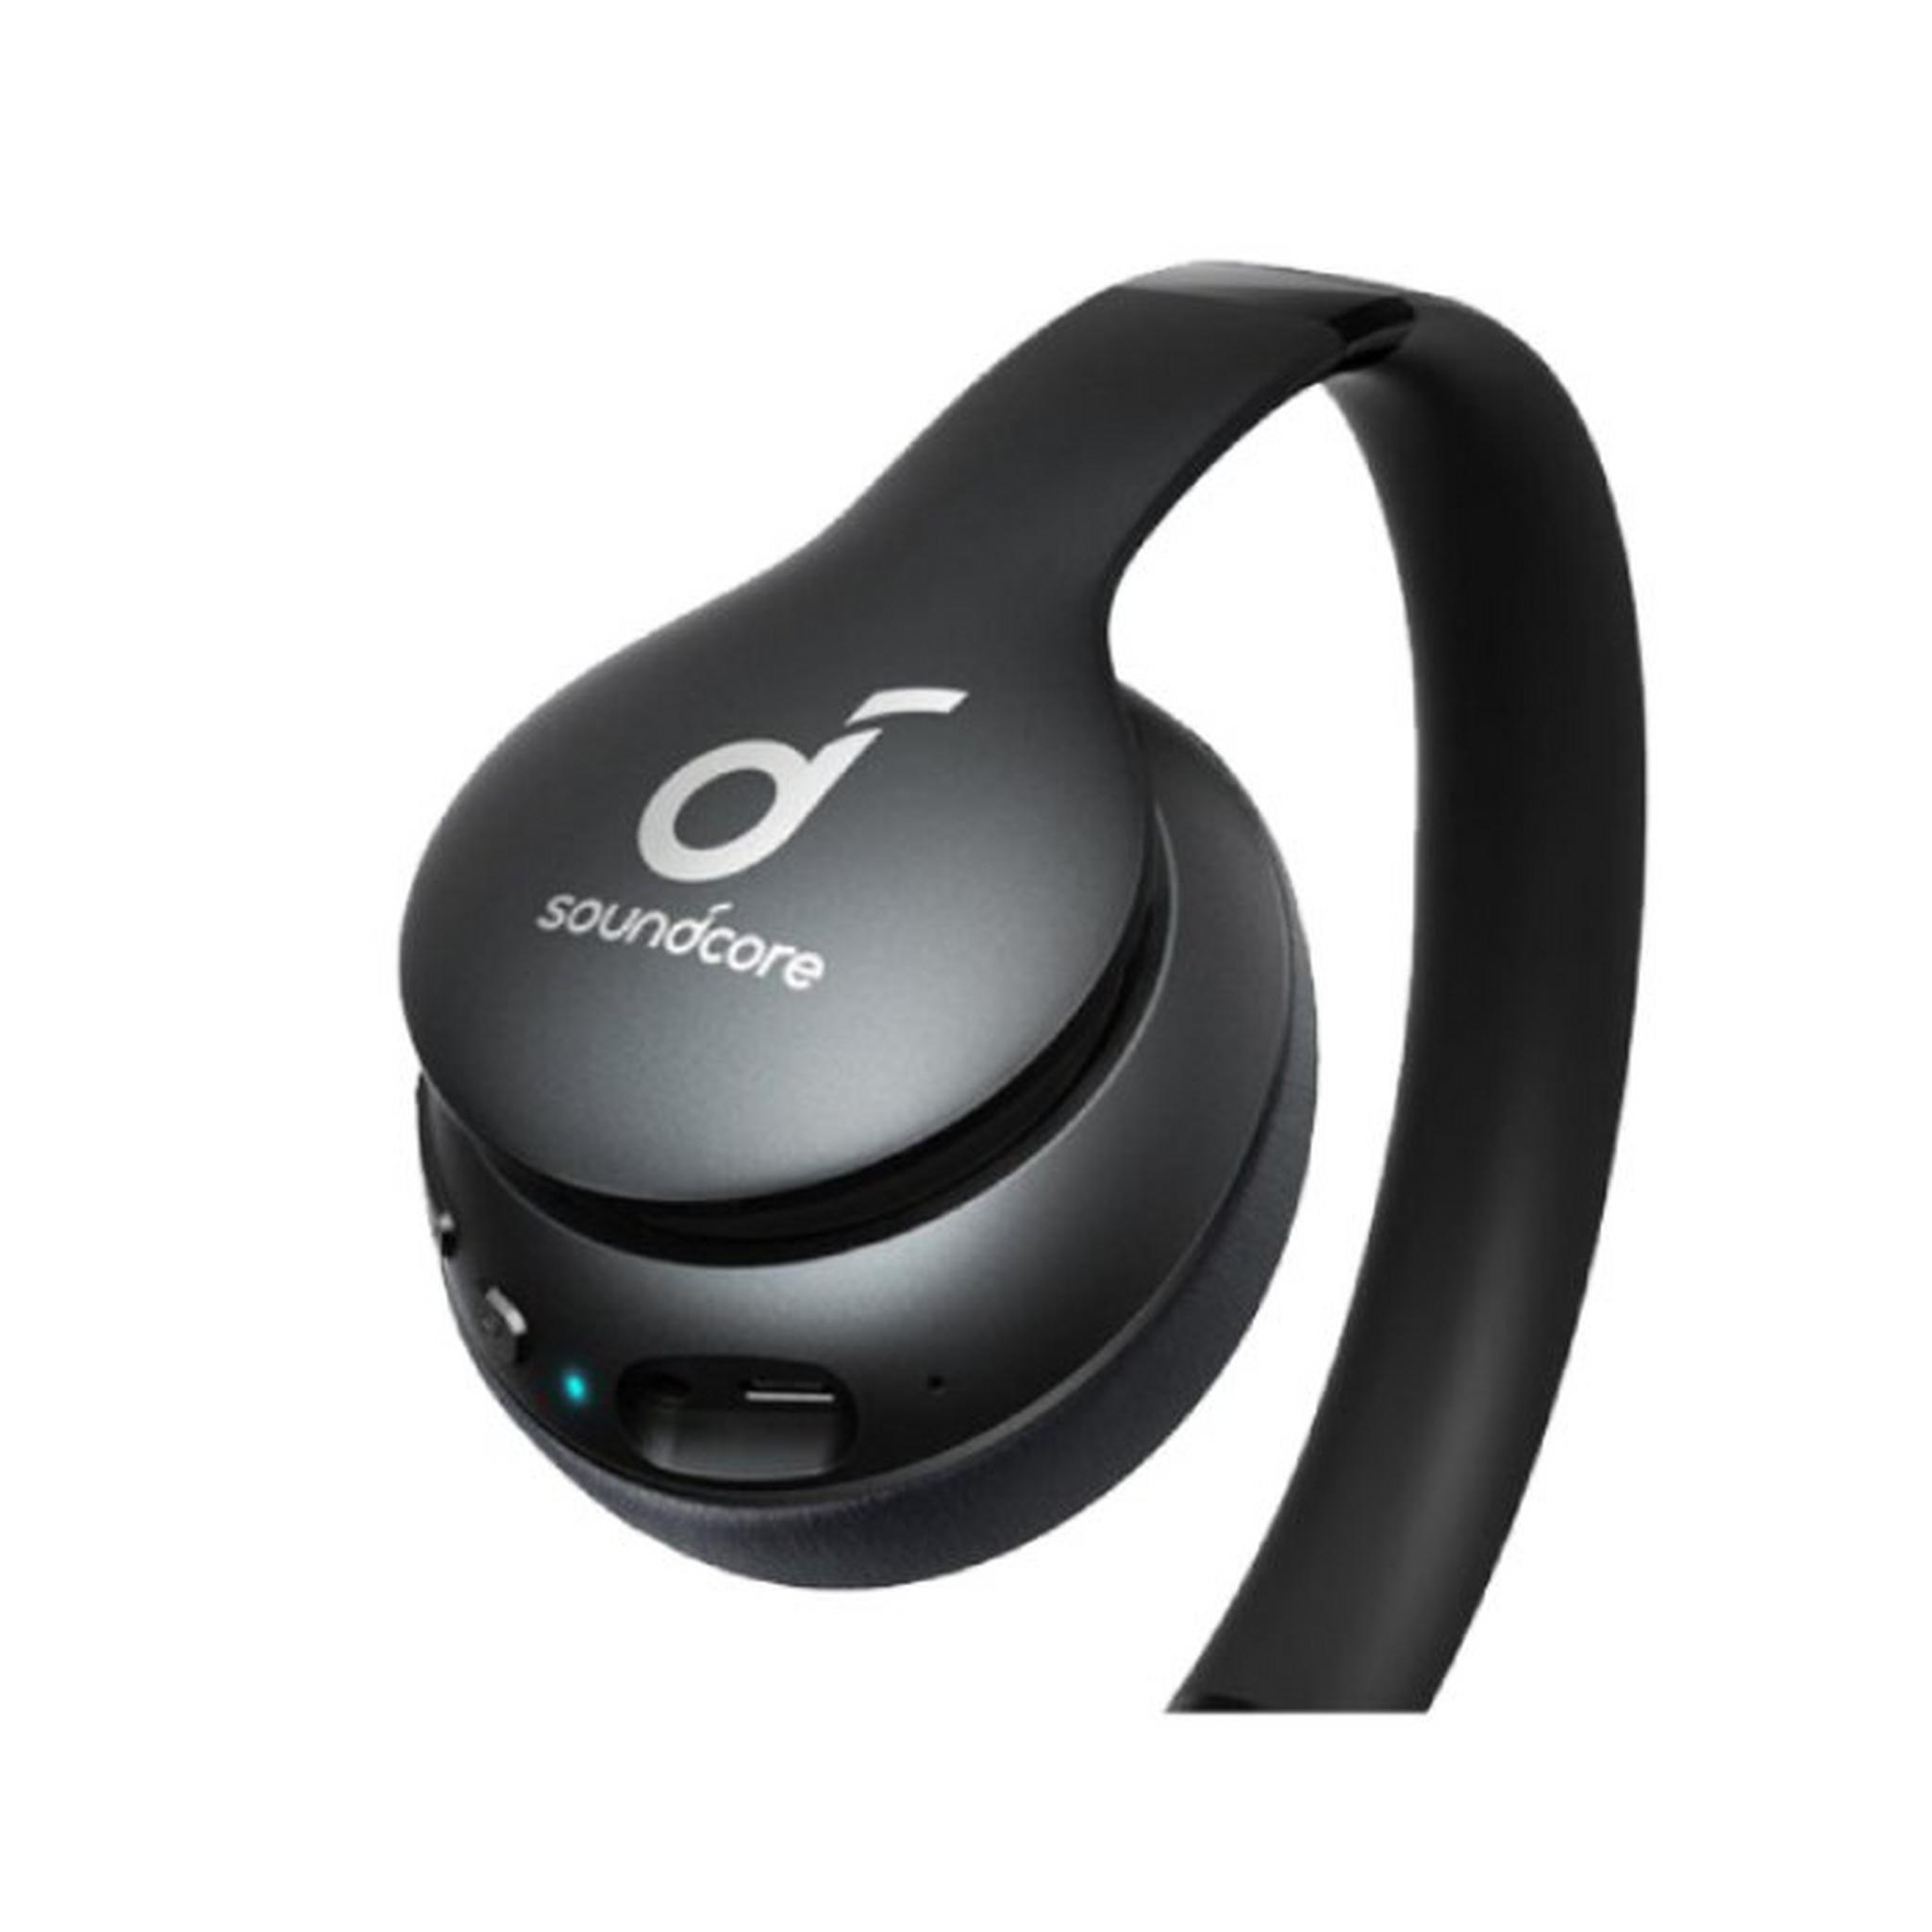 Anker Soundcore Q10i Wireless Headphone, A3033Y11 – Black